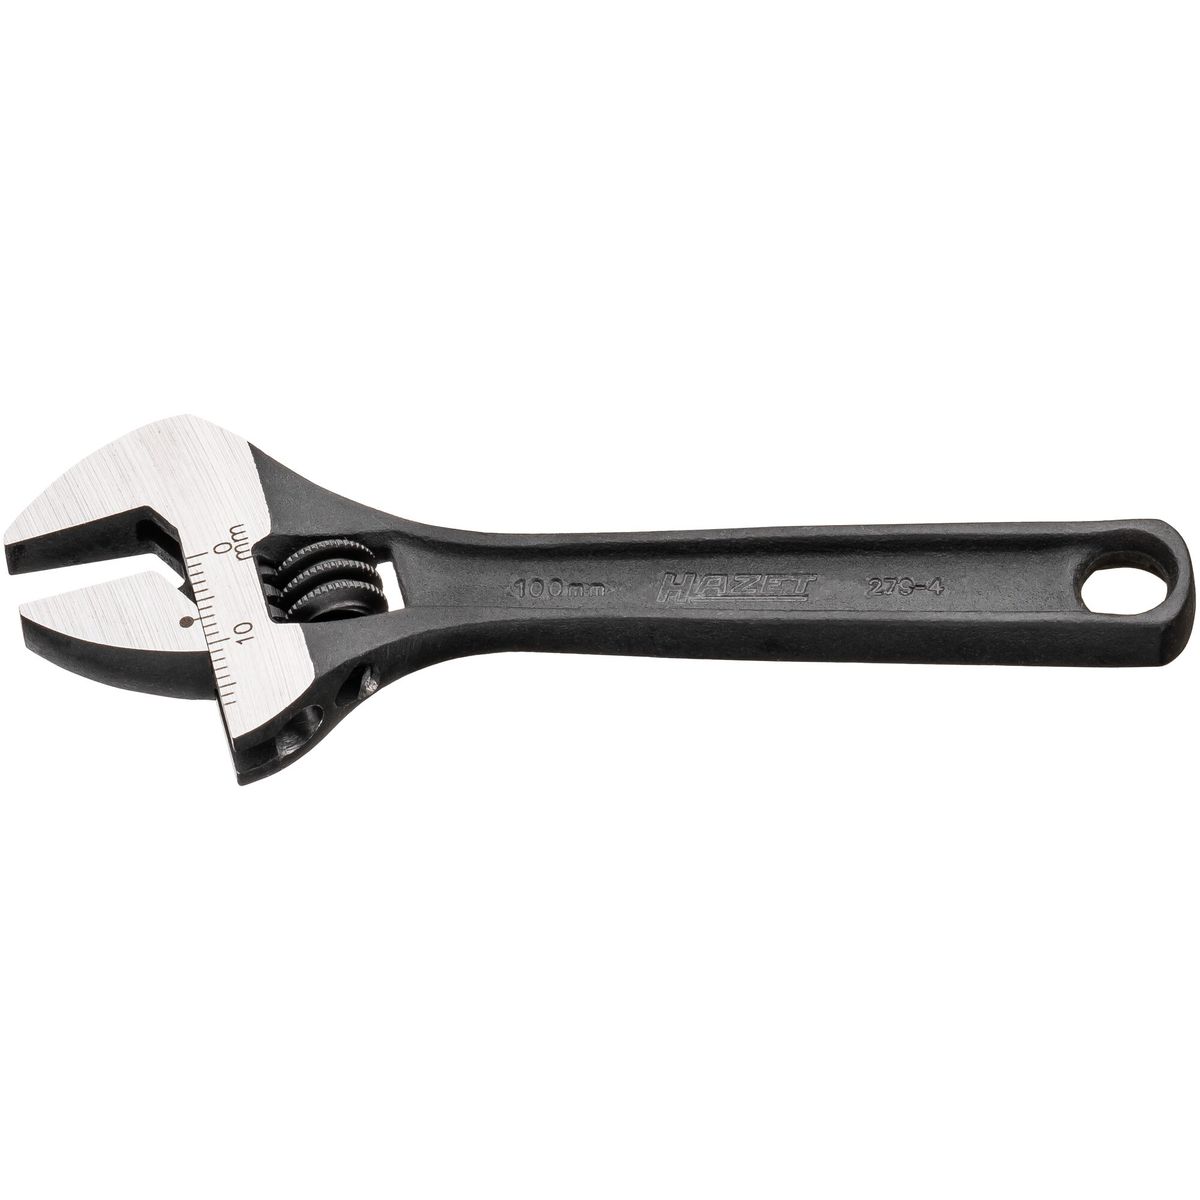 Adjustable Wrench No.279-4 Hazet